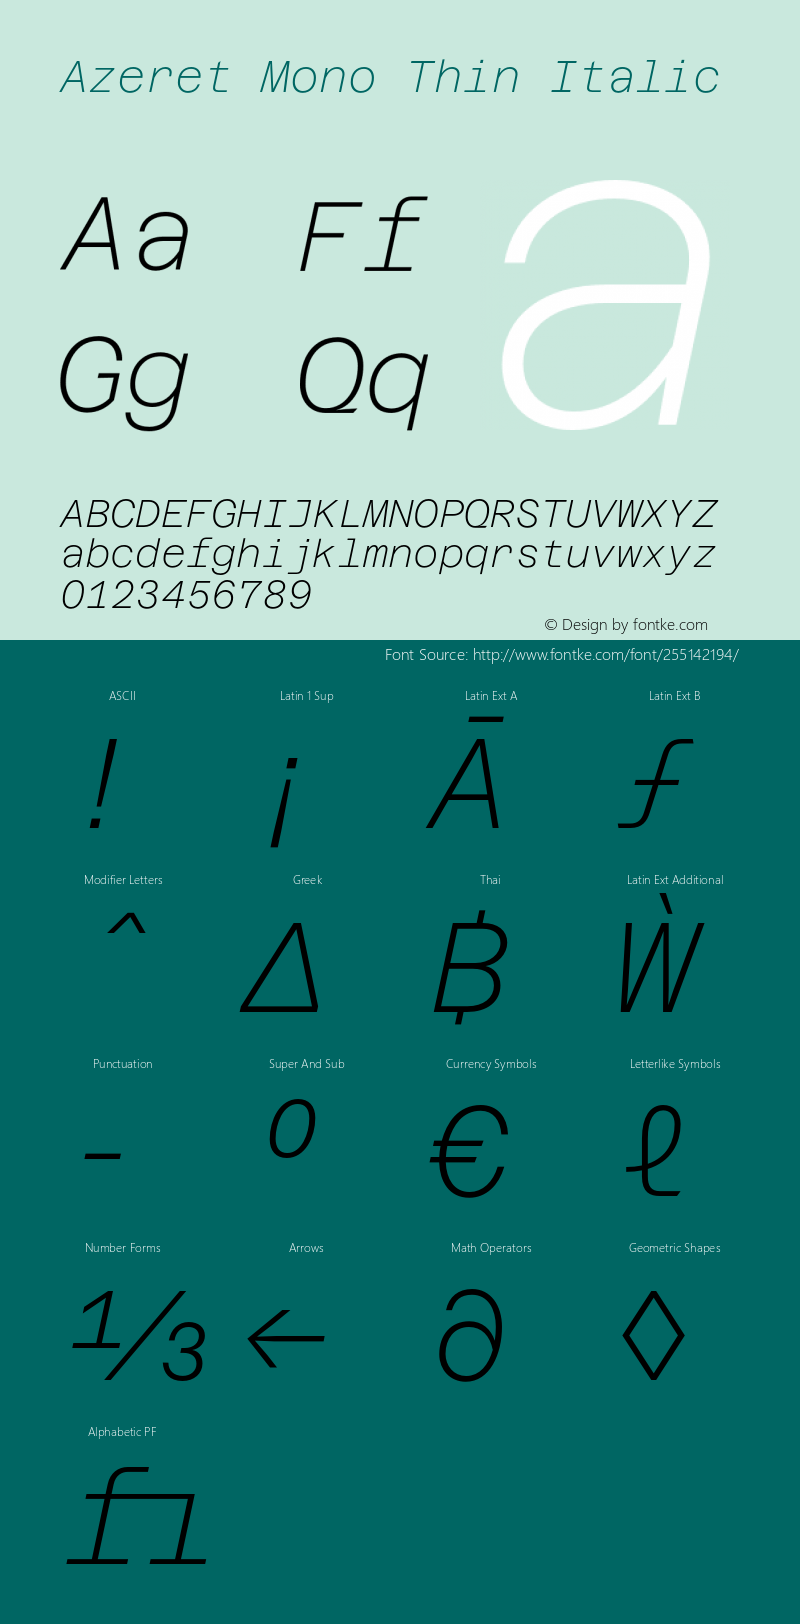 Azeret Mono Thin Italic Version 1.000; Glyphs 3.0.3, build 3084图片样张